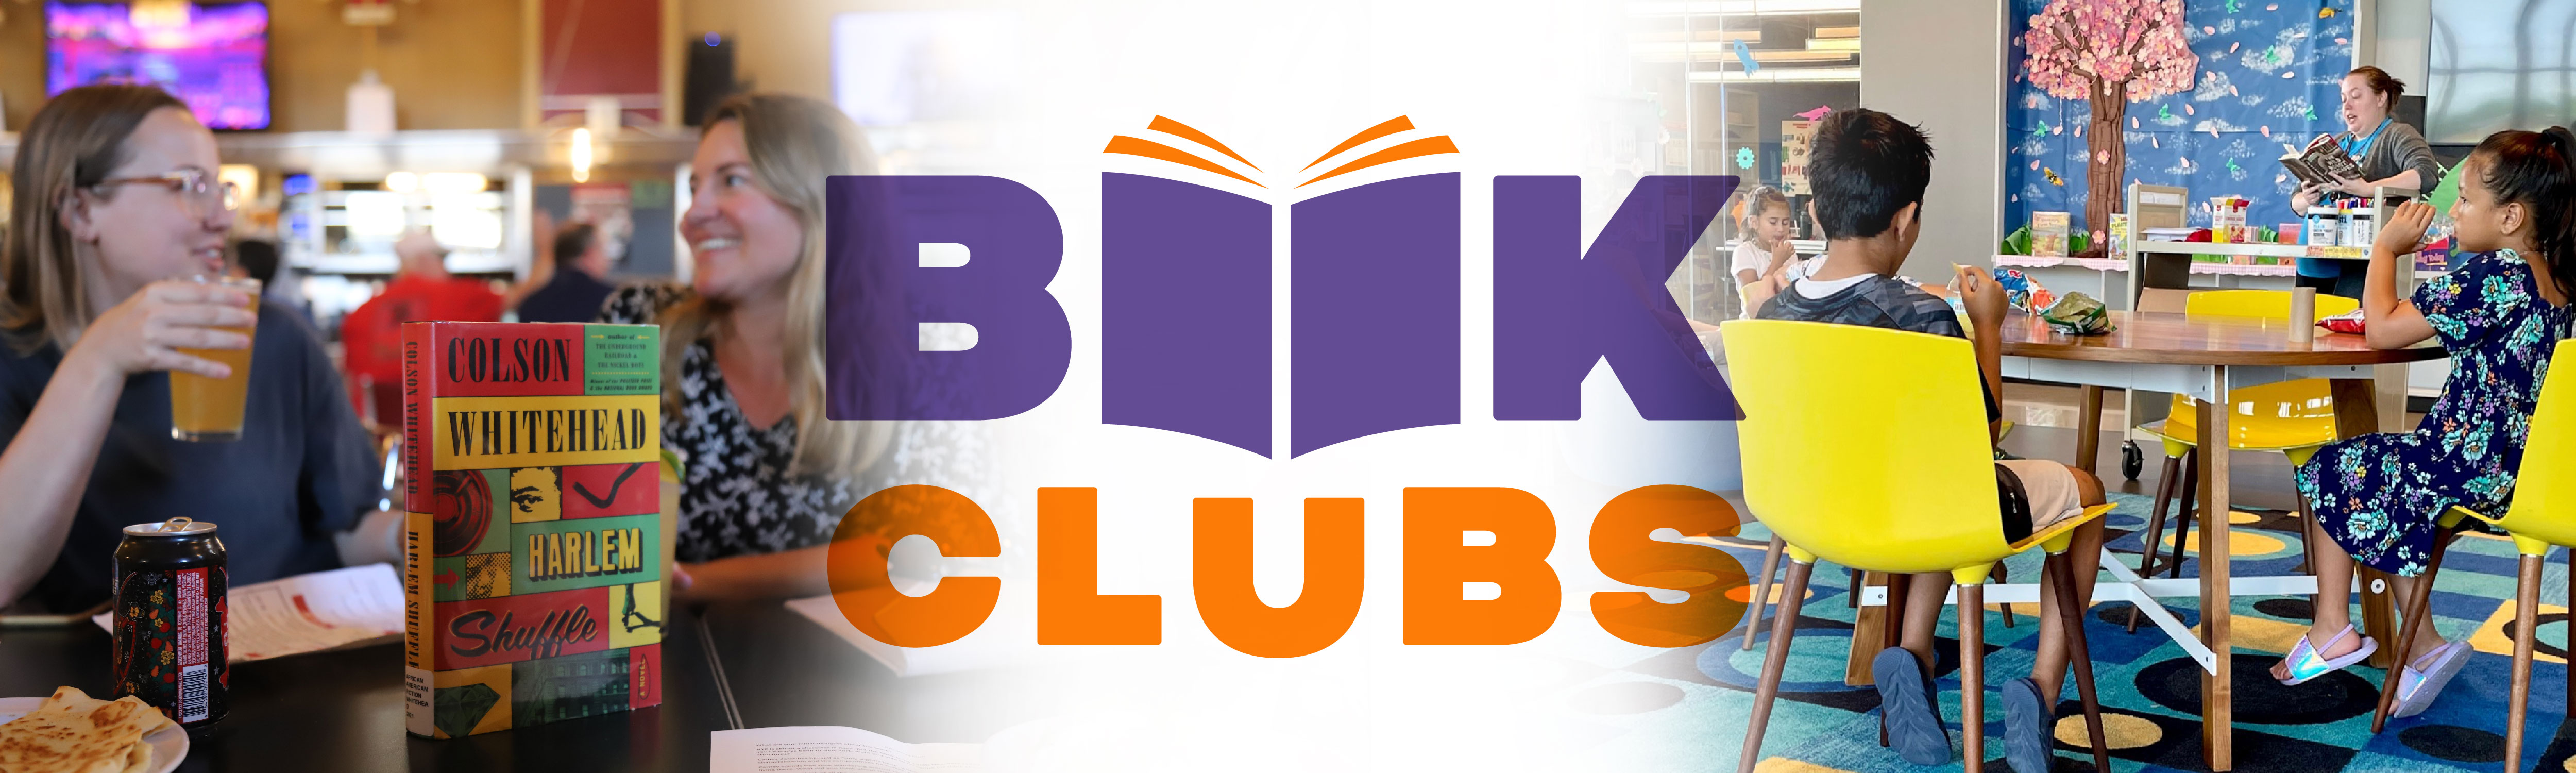 book-club-web.jpg